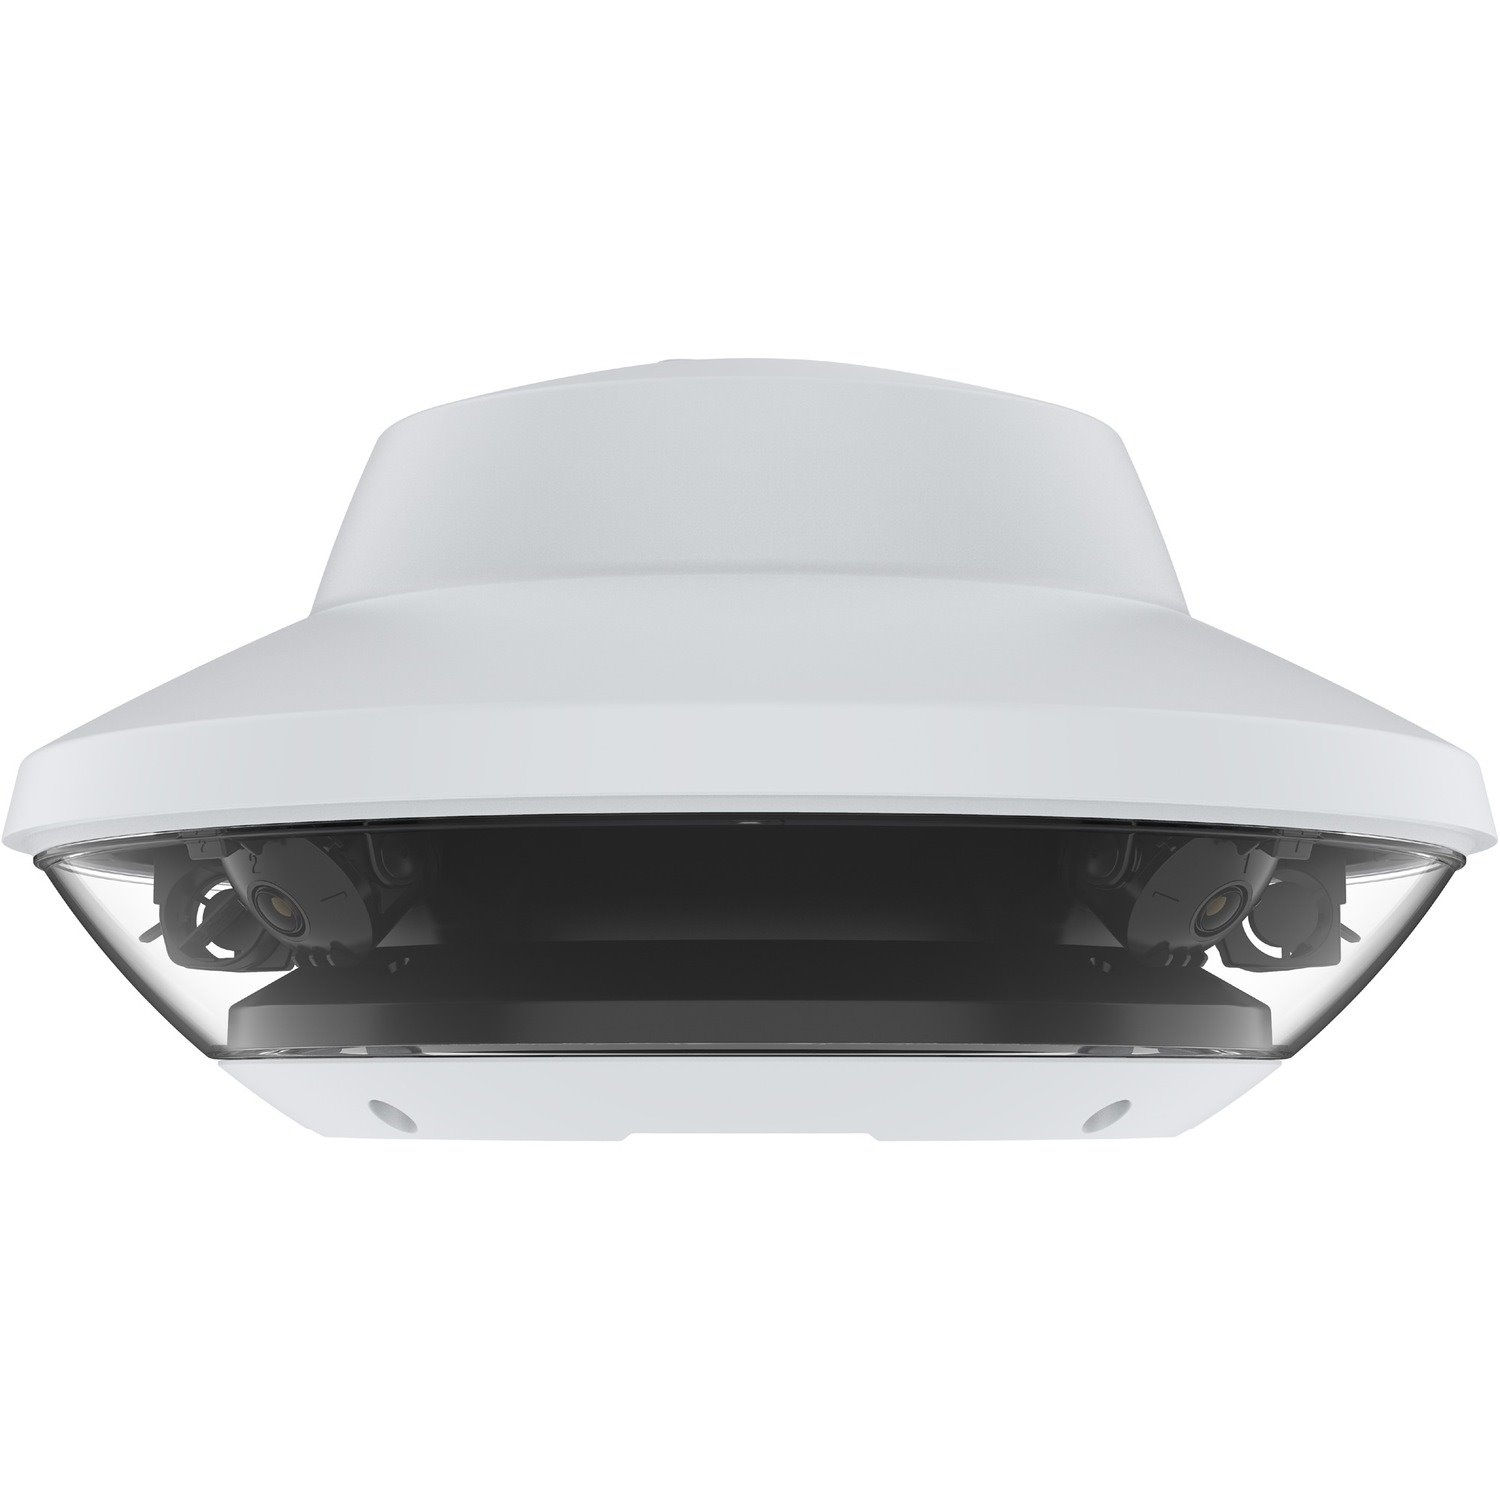 AXIS Q6010-E 20 Megapixel Outdoor Network Camera - Color - Dome